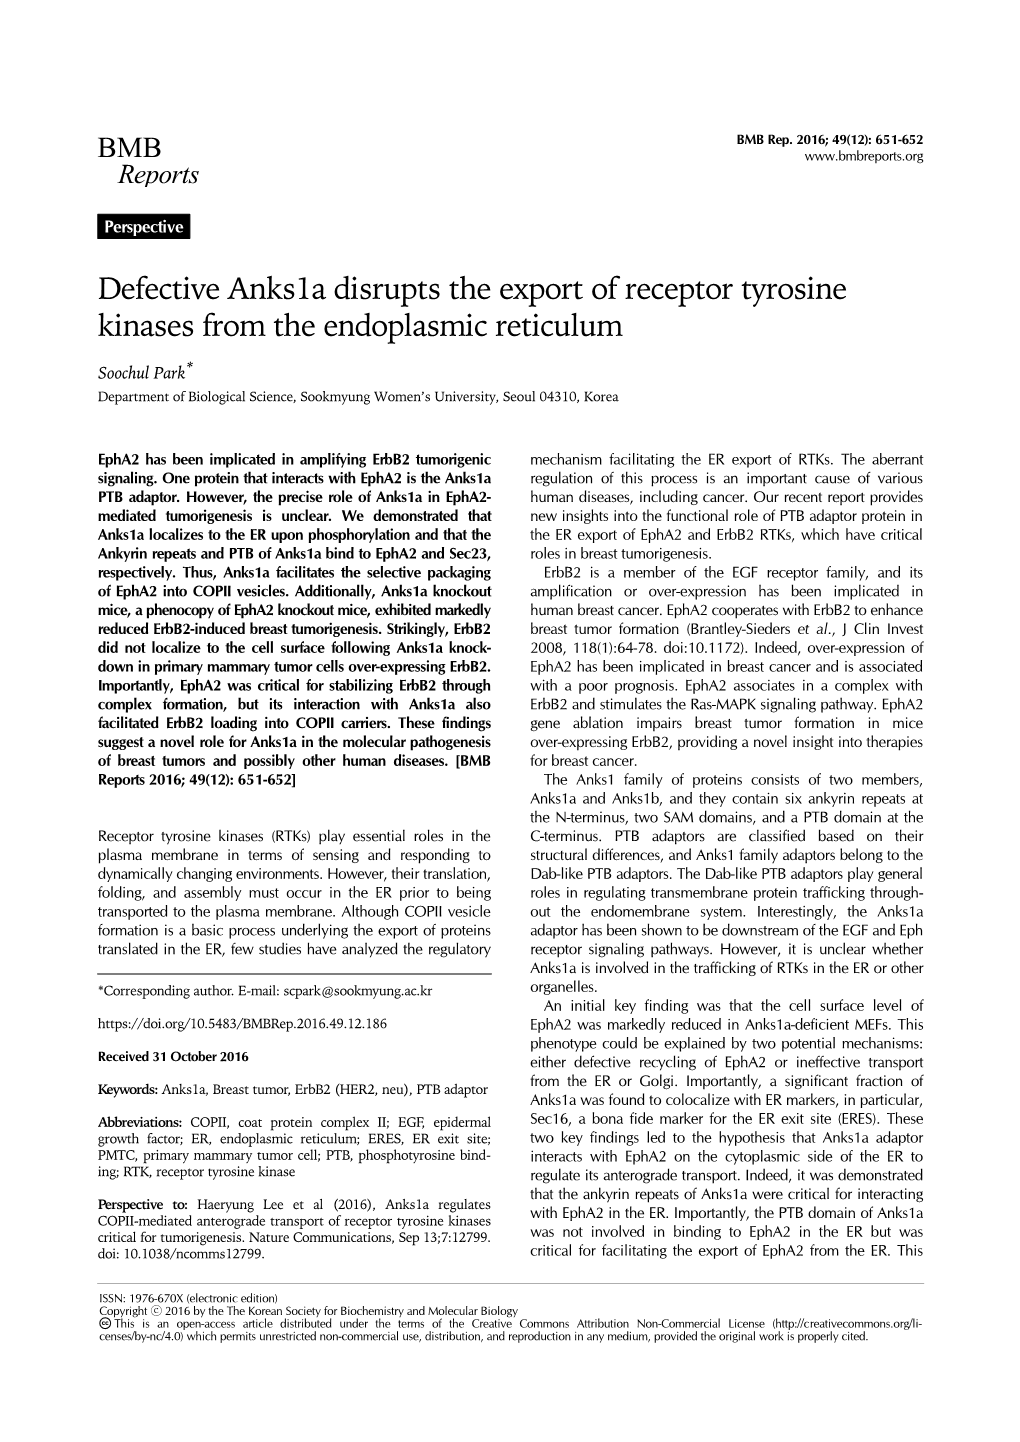 Defective Anks1a Disrupts the Export of Receptor Tyrosine Kinases from the Endoplasmic Reticulum